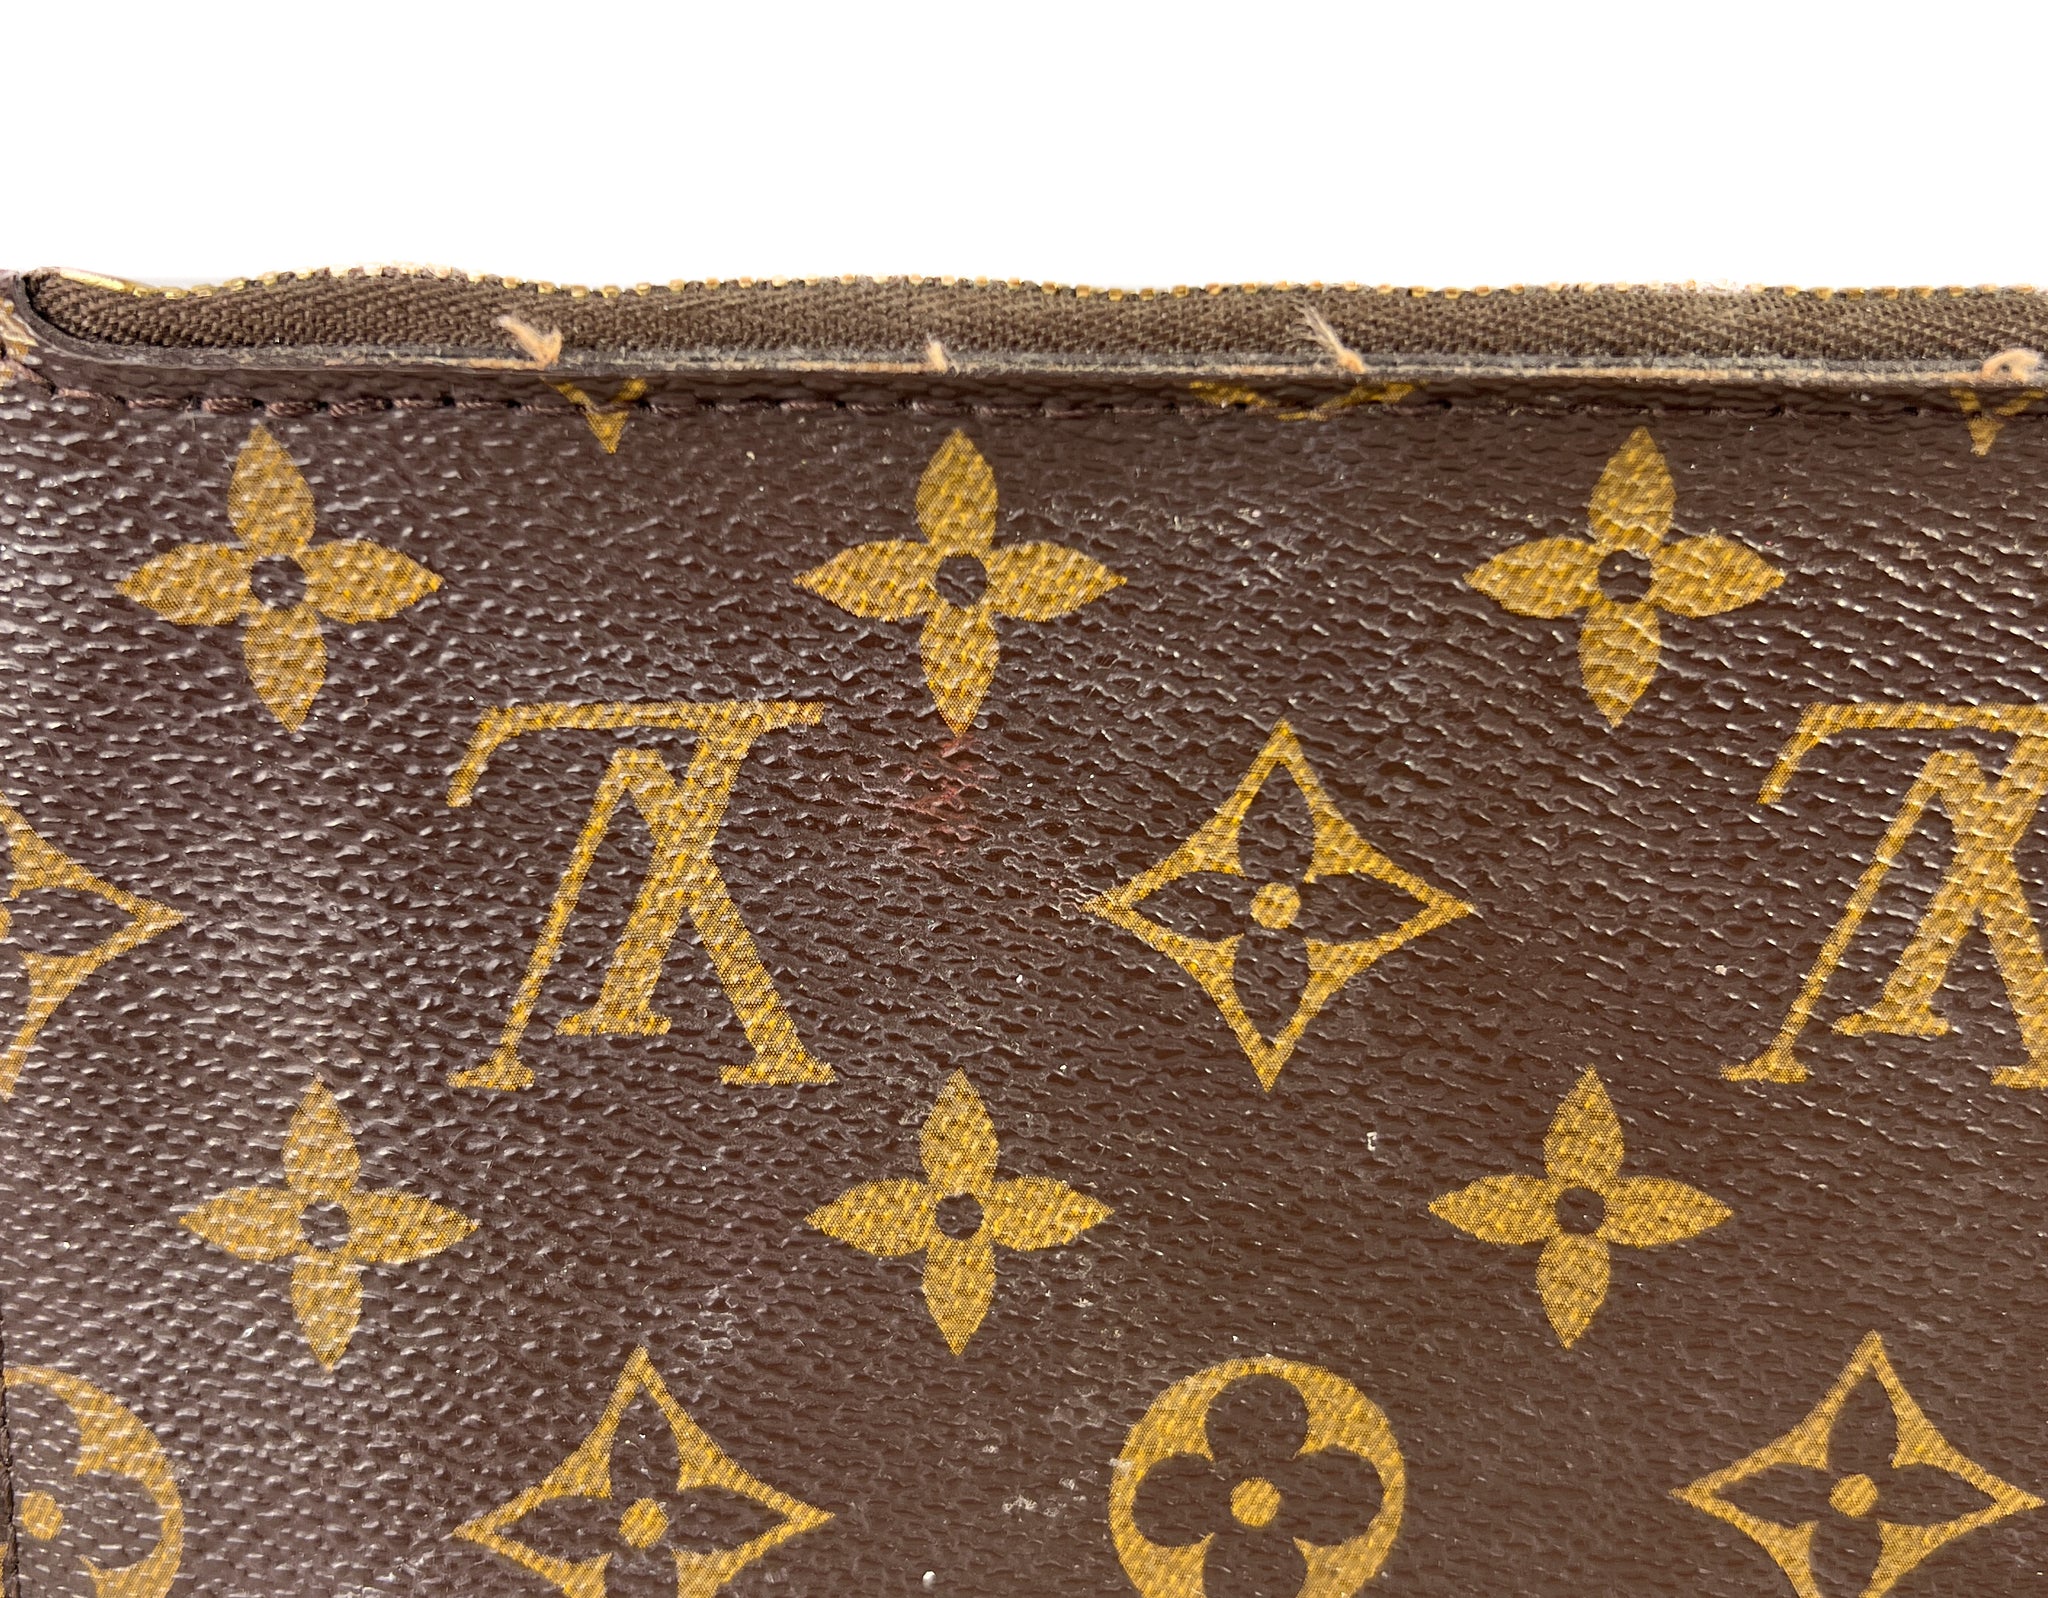 Louis Vuitton monogram neverfull zip pouch 2014 – My Girlfriend's